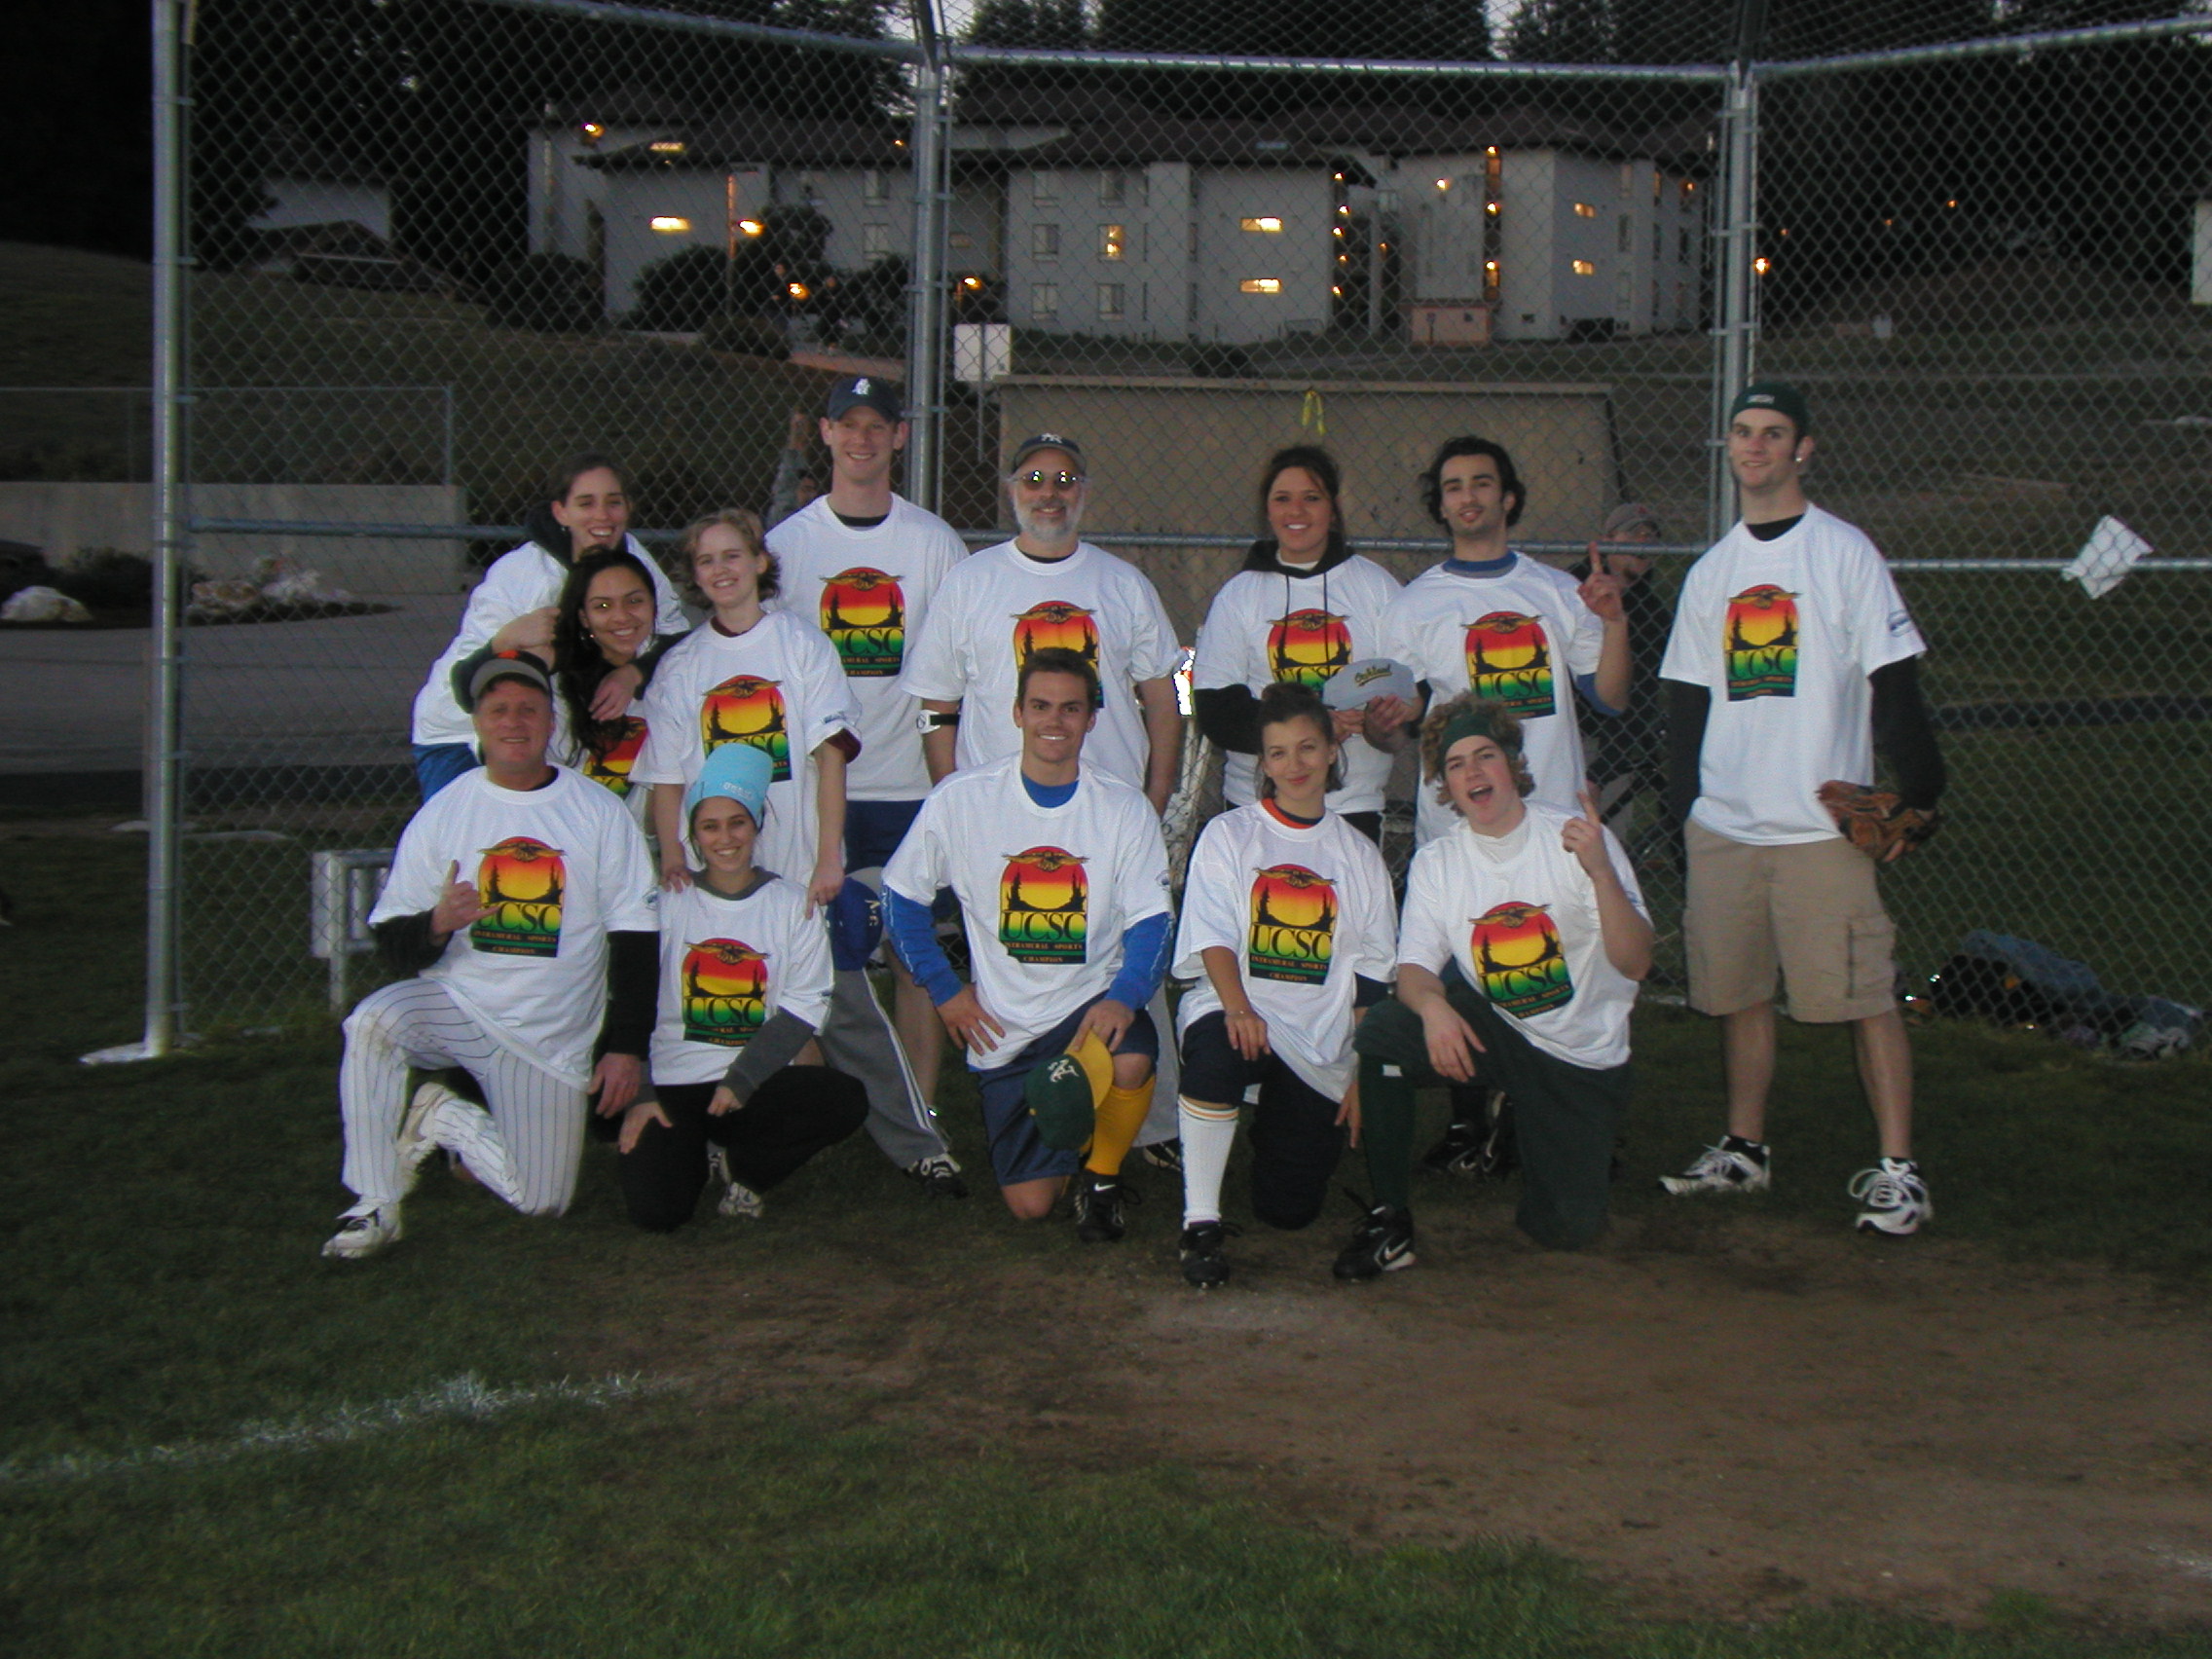 Fall 2004 Softball Champions